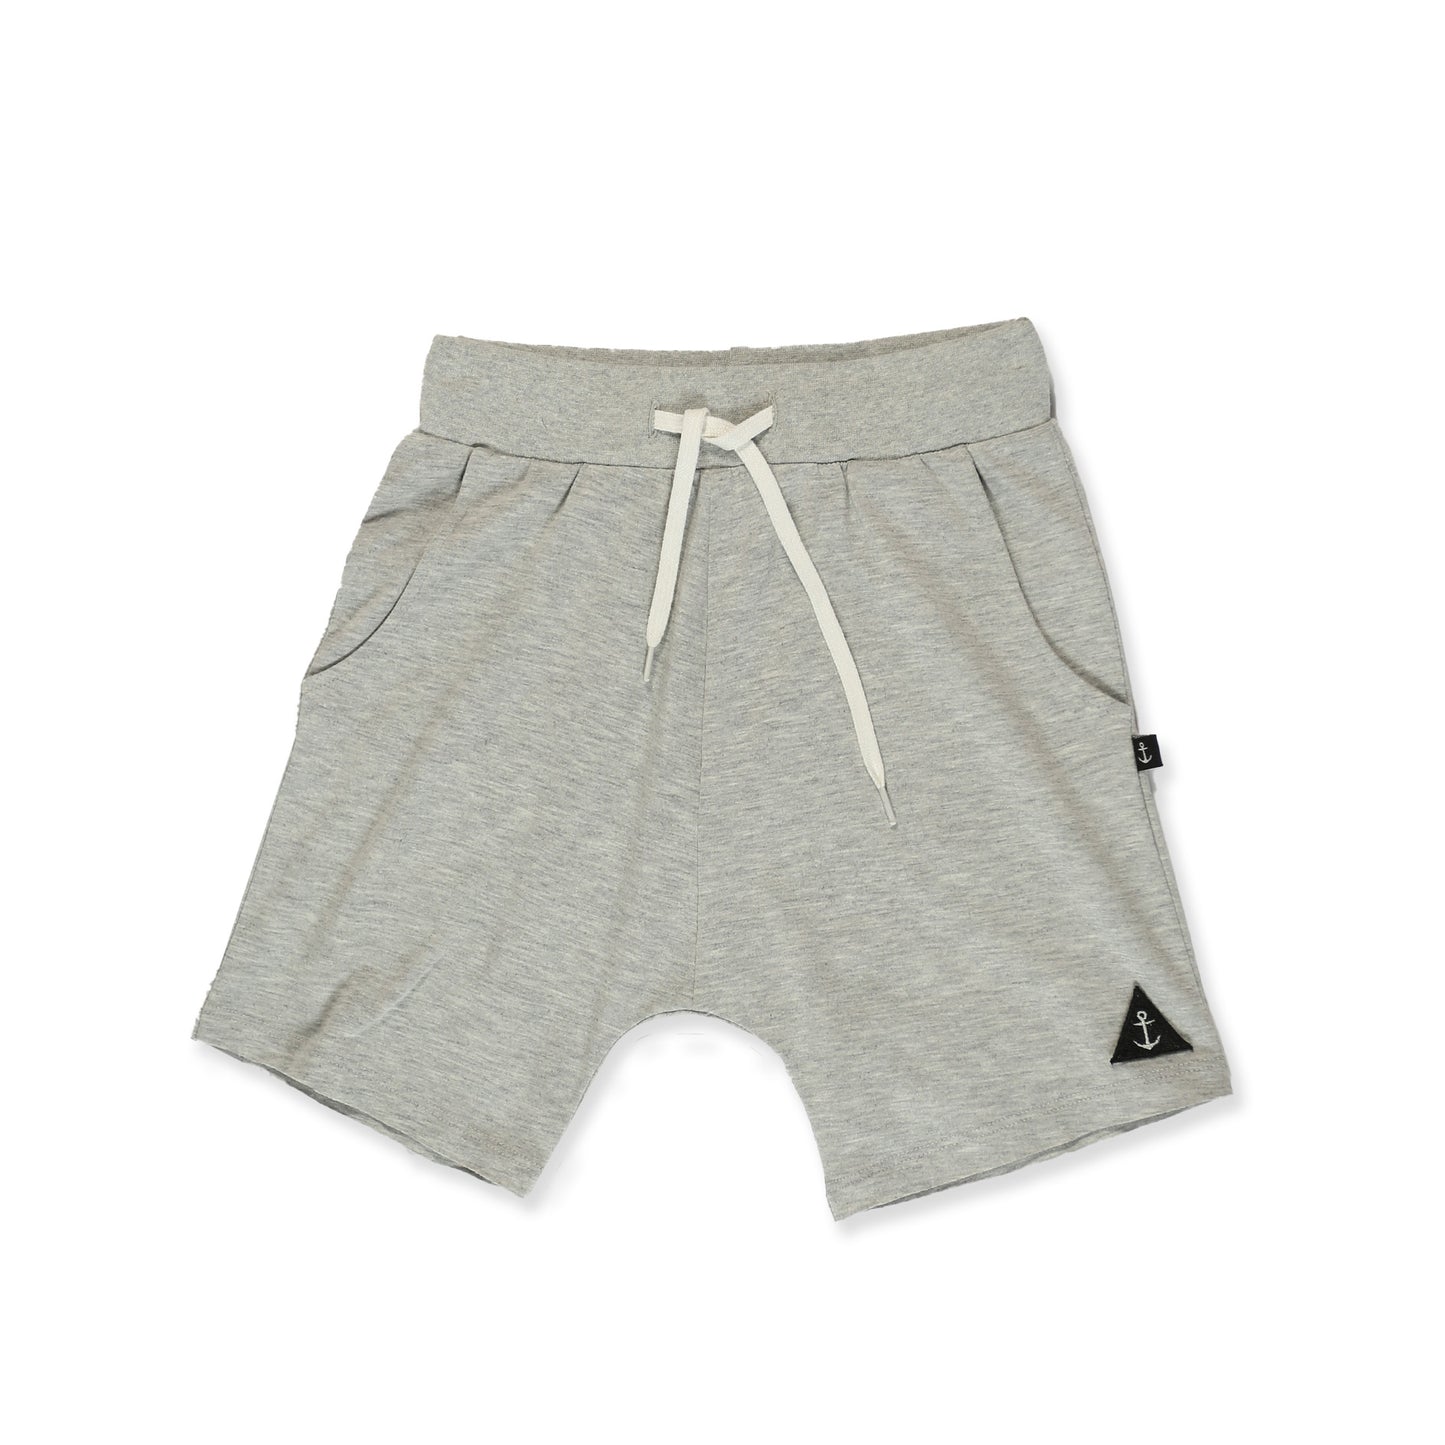 Tankie Shorts - Grey